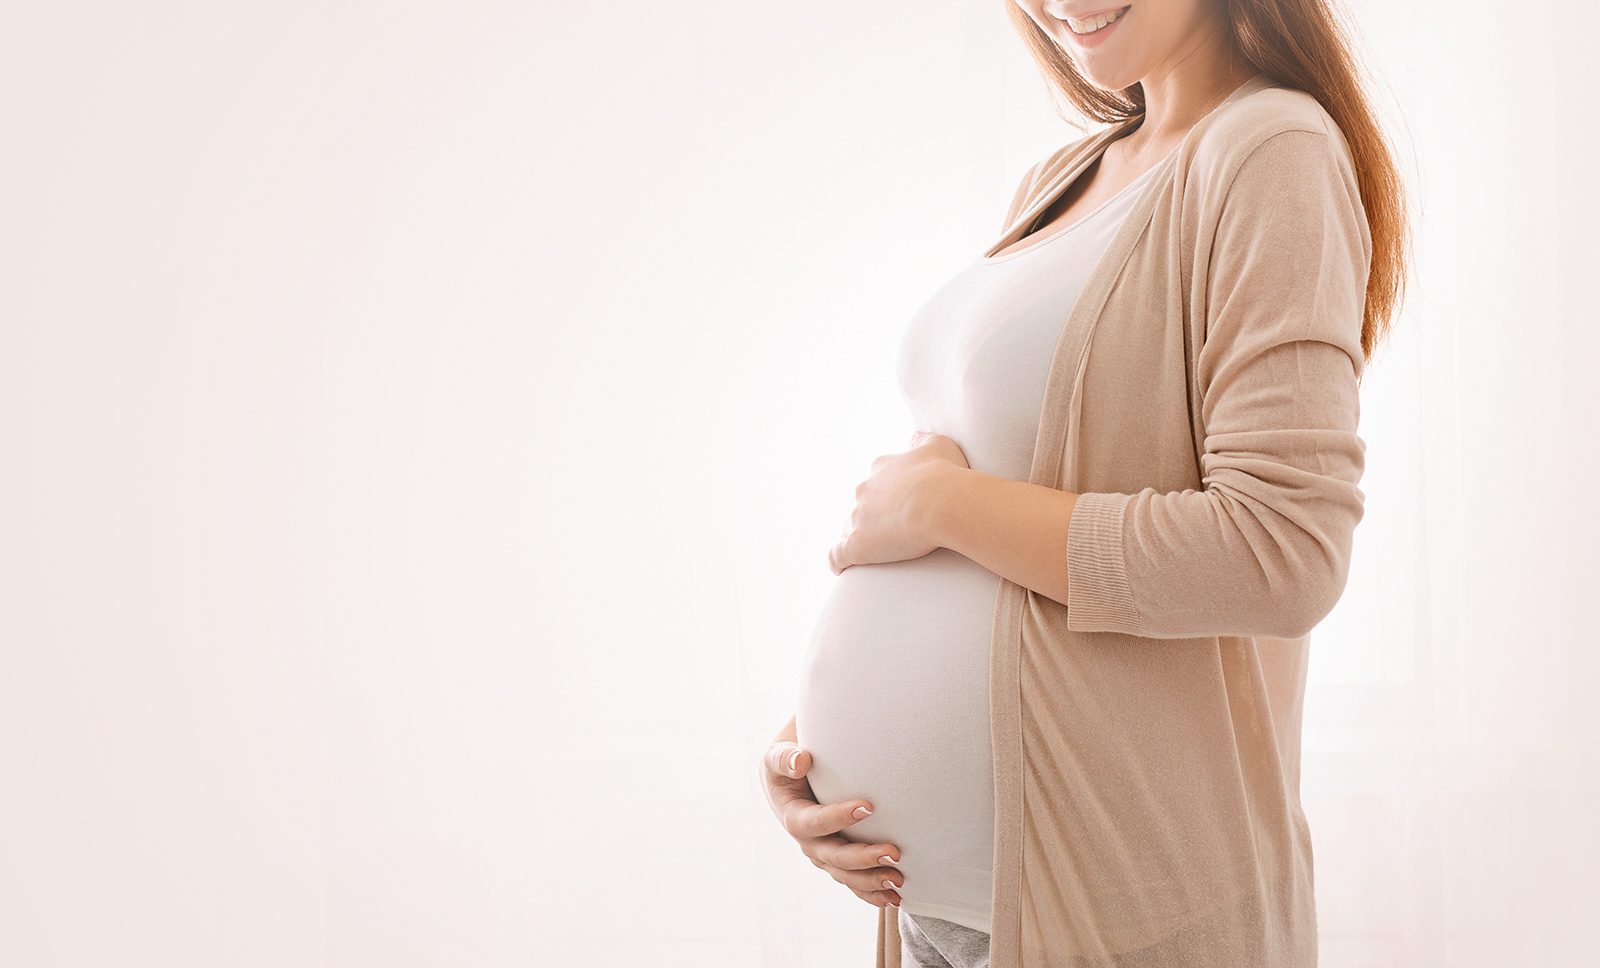 Healthbanks Pregnancy Blog